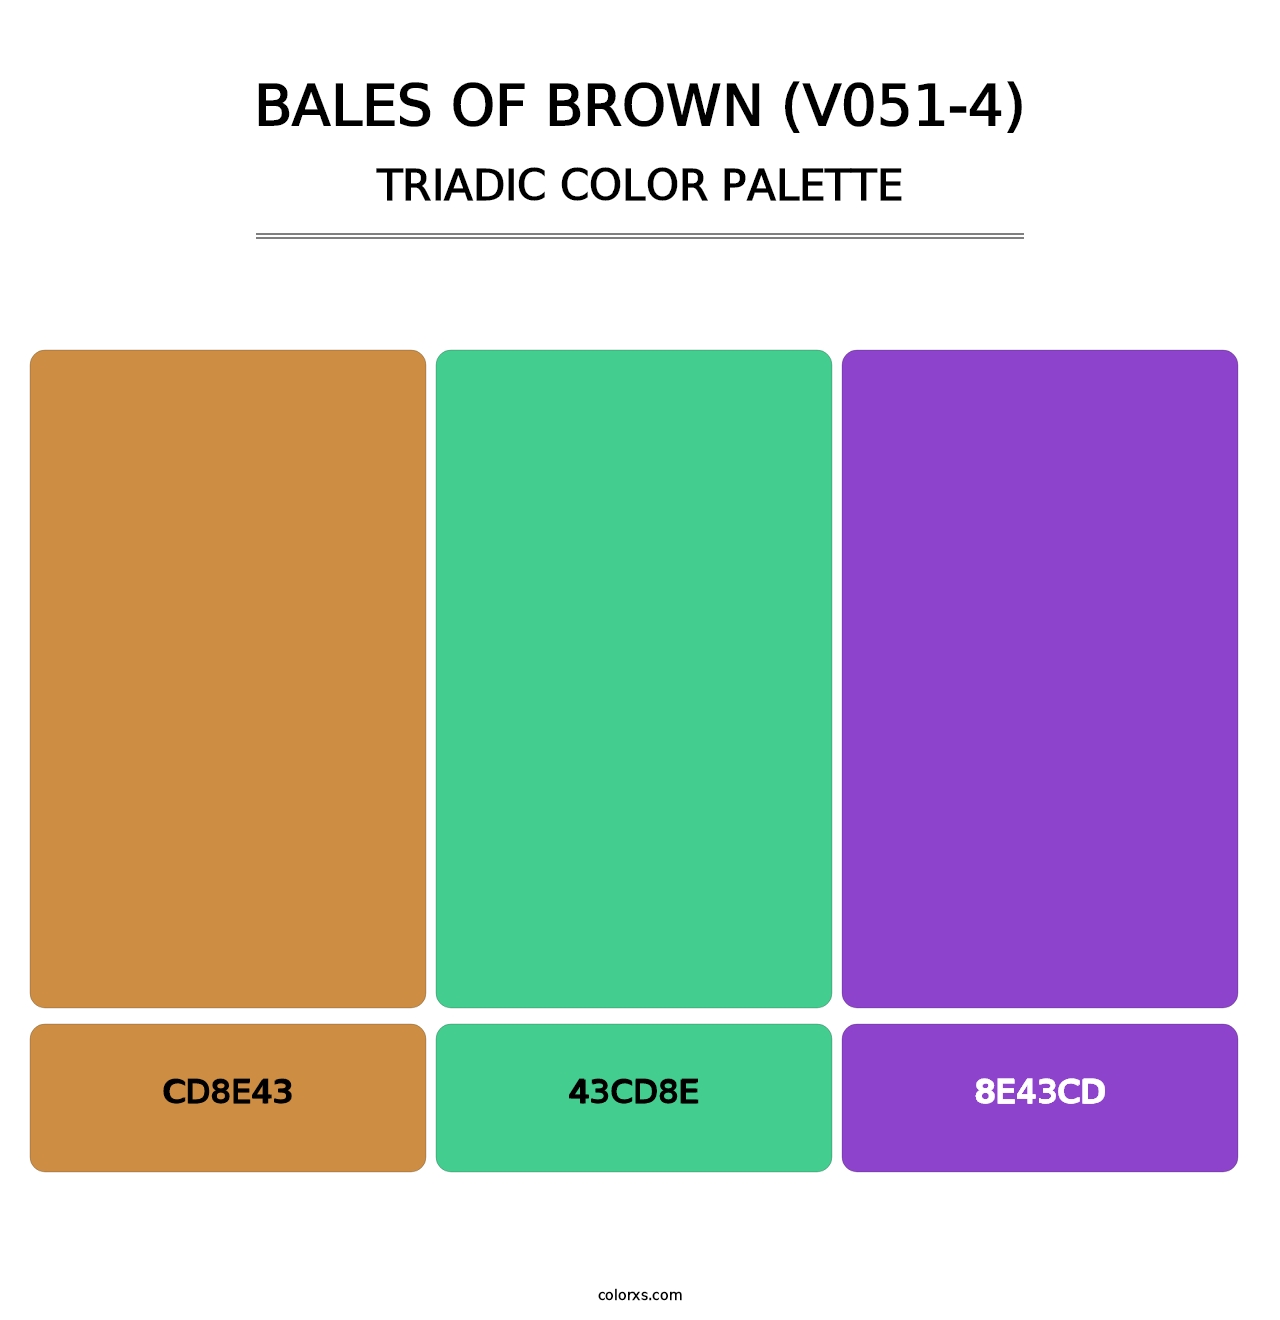 Bales of Brown (V051-4) - Triadic Color Palette